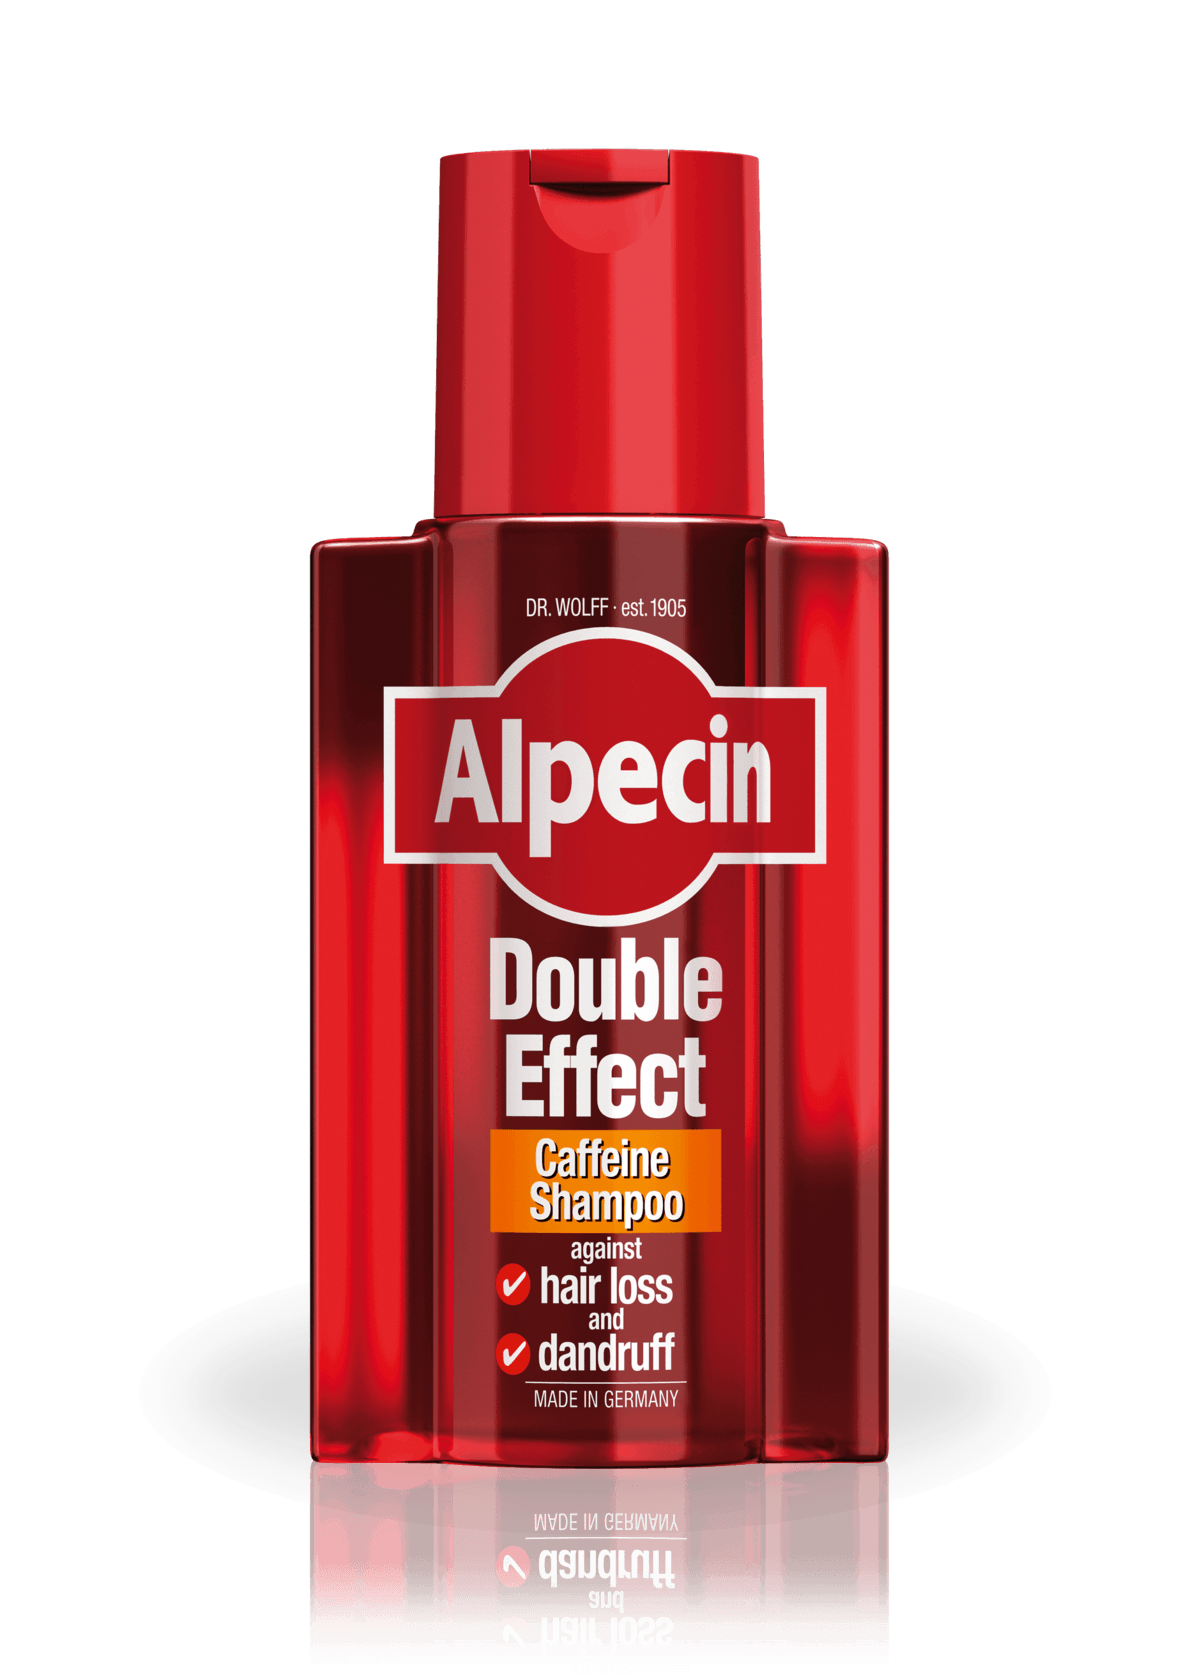 Alpecin Double Effect Caffeine Shampoo - welzo